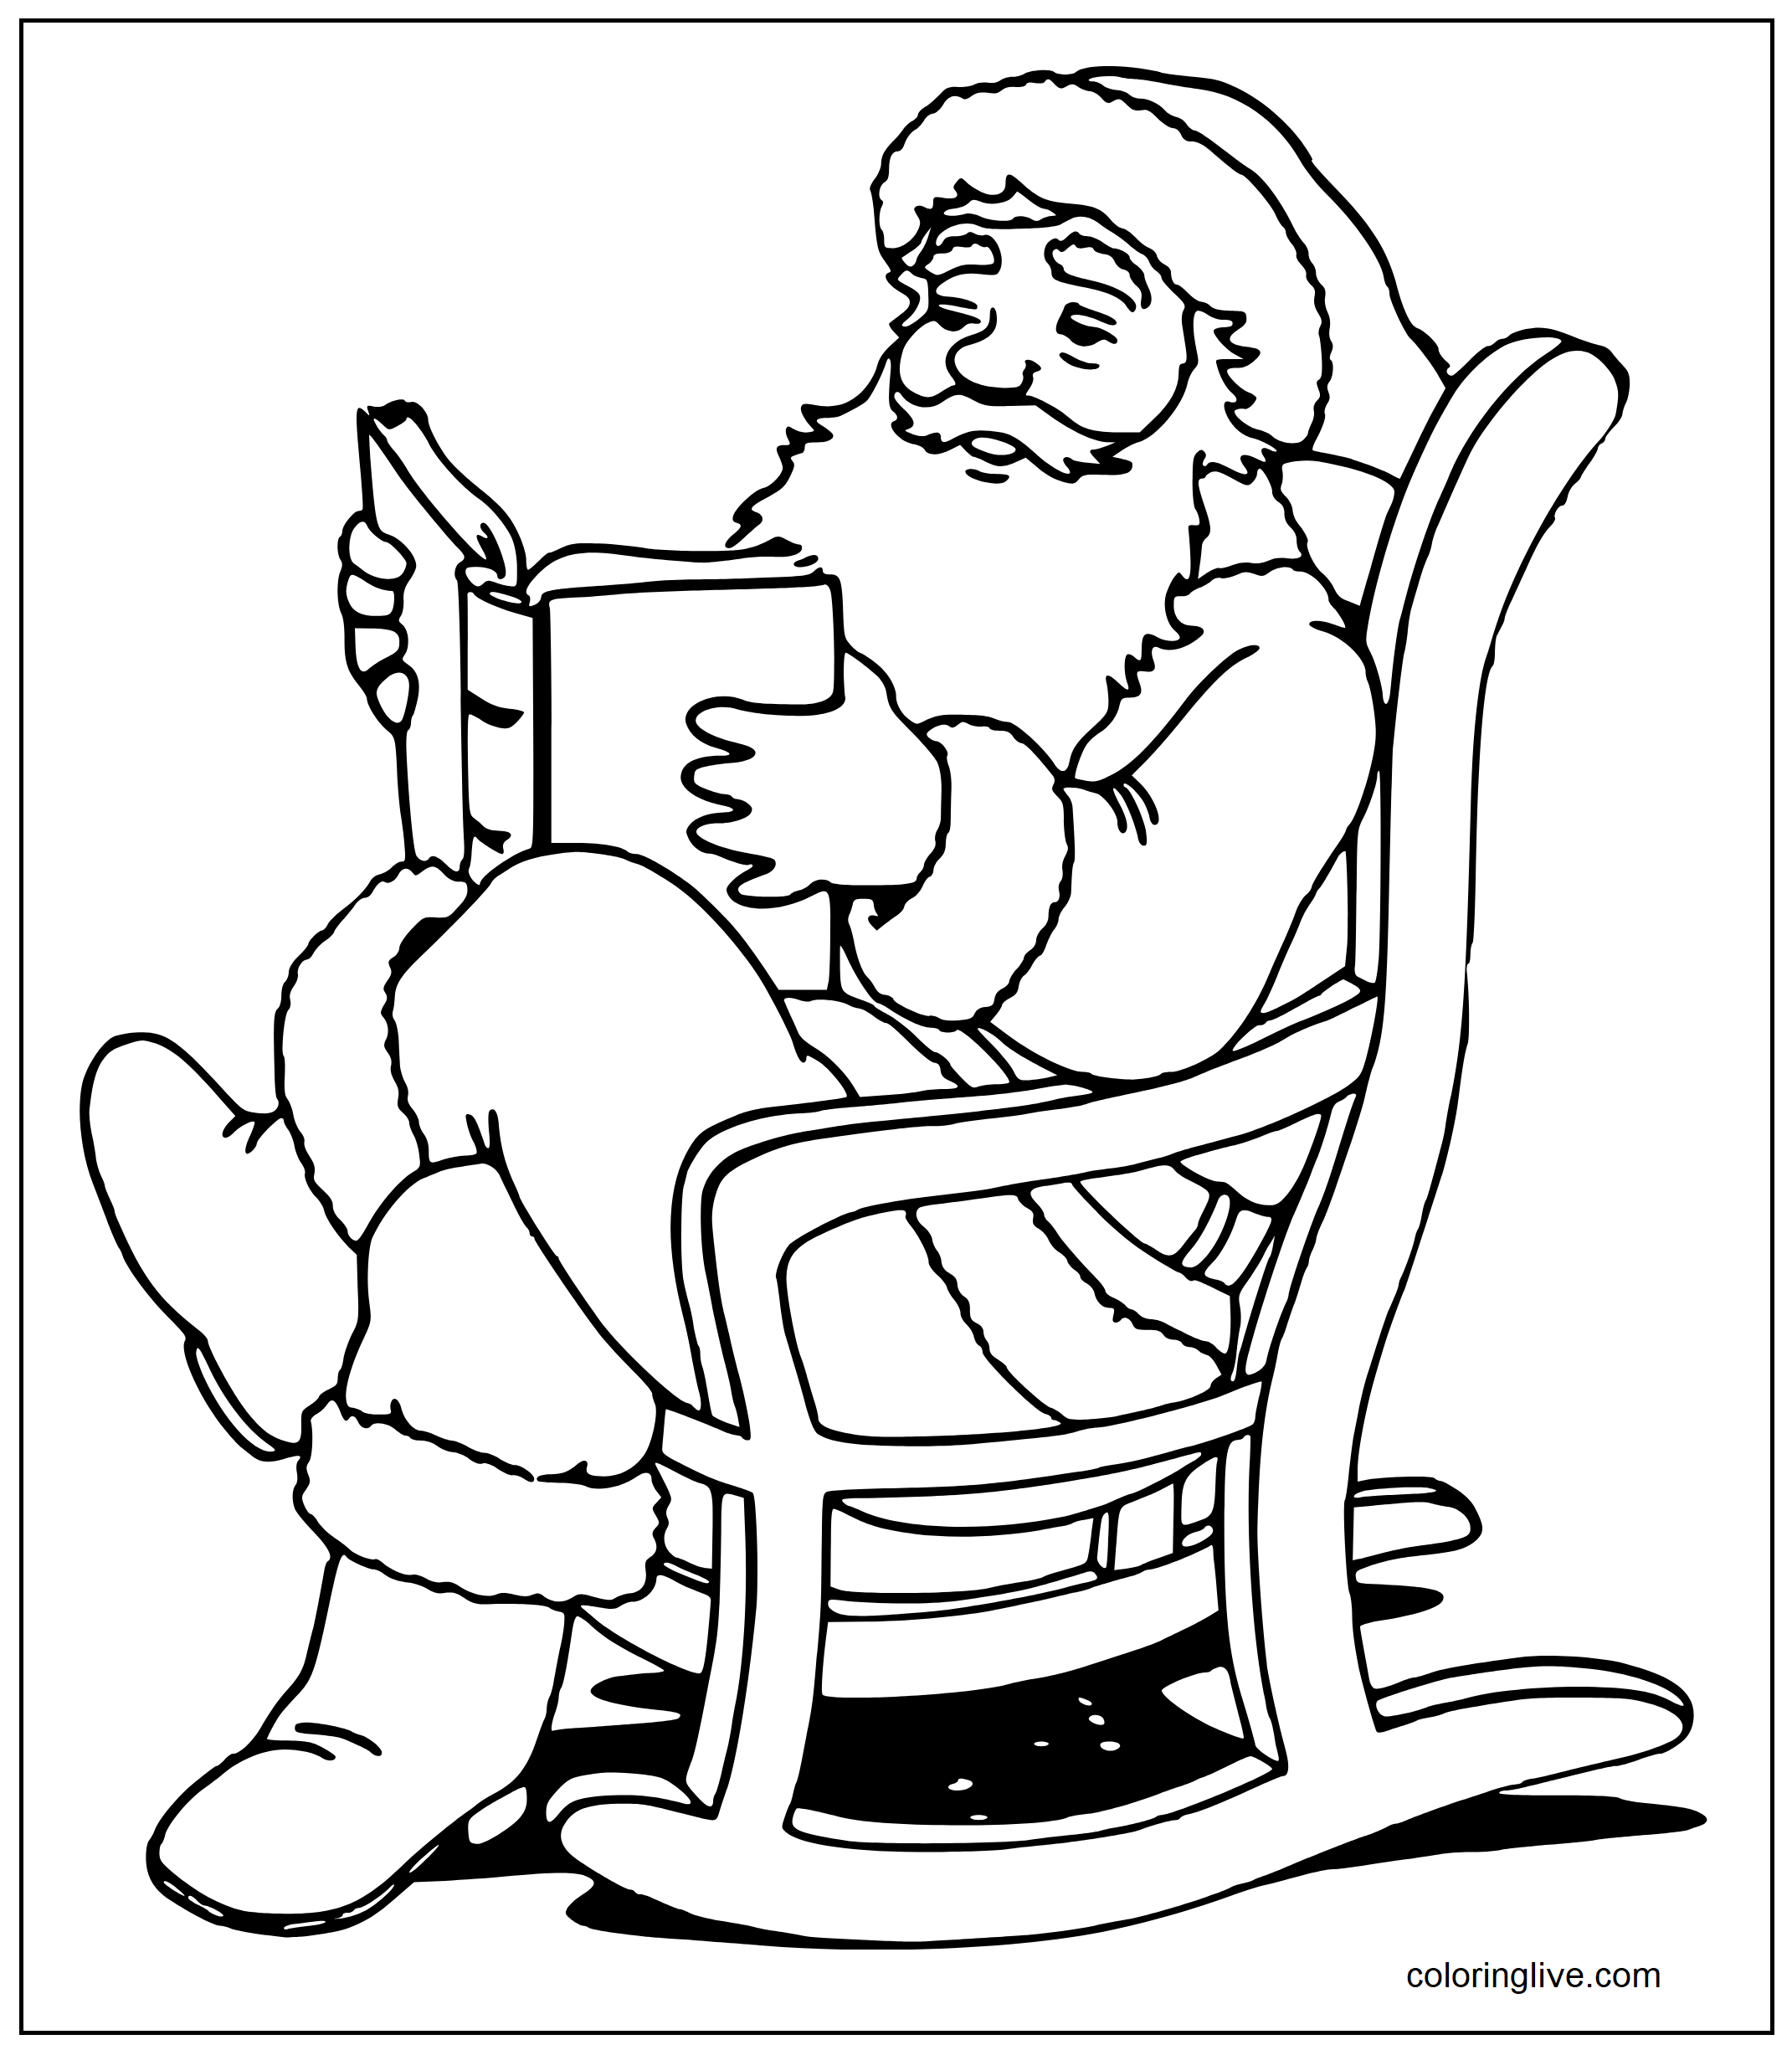 Printable Santa reading a book  sheet Coloring Page for kids.